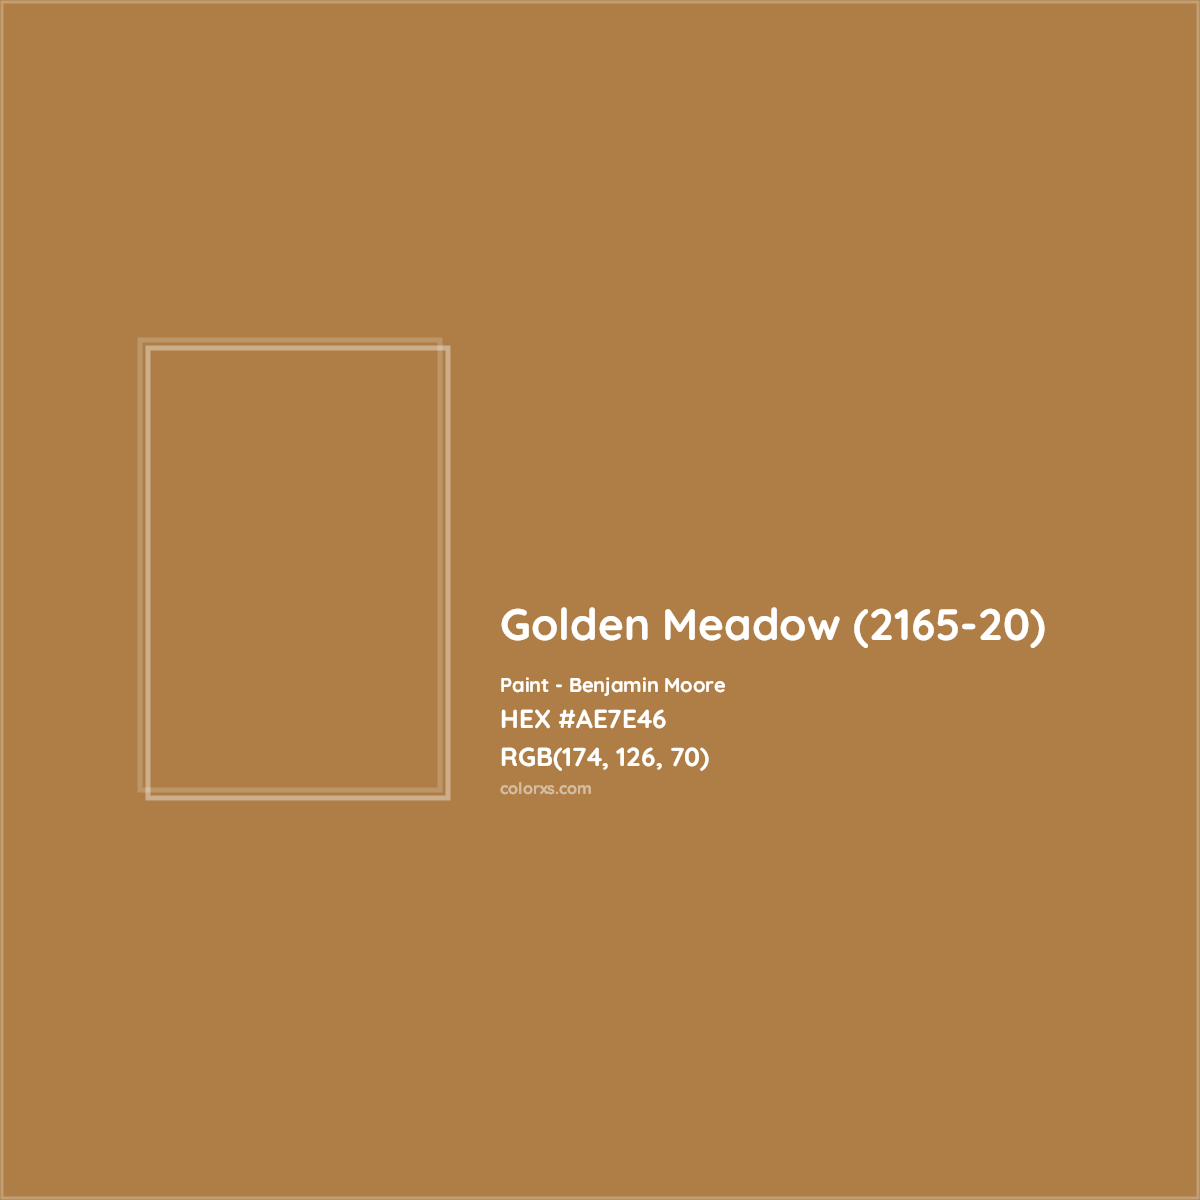 HEX #AE7E46 Golden Meadow (2165-20) Paint Benjamin Moore - Color Code